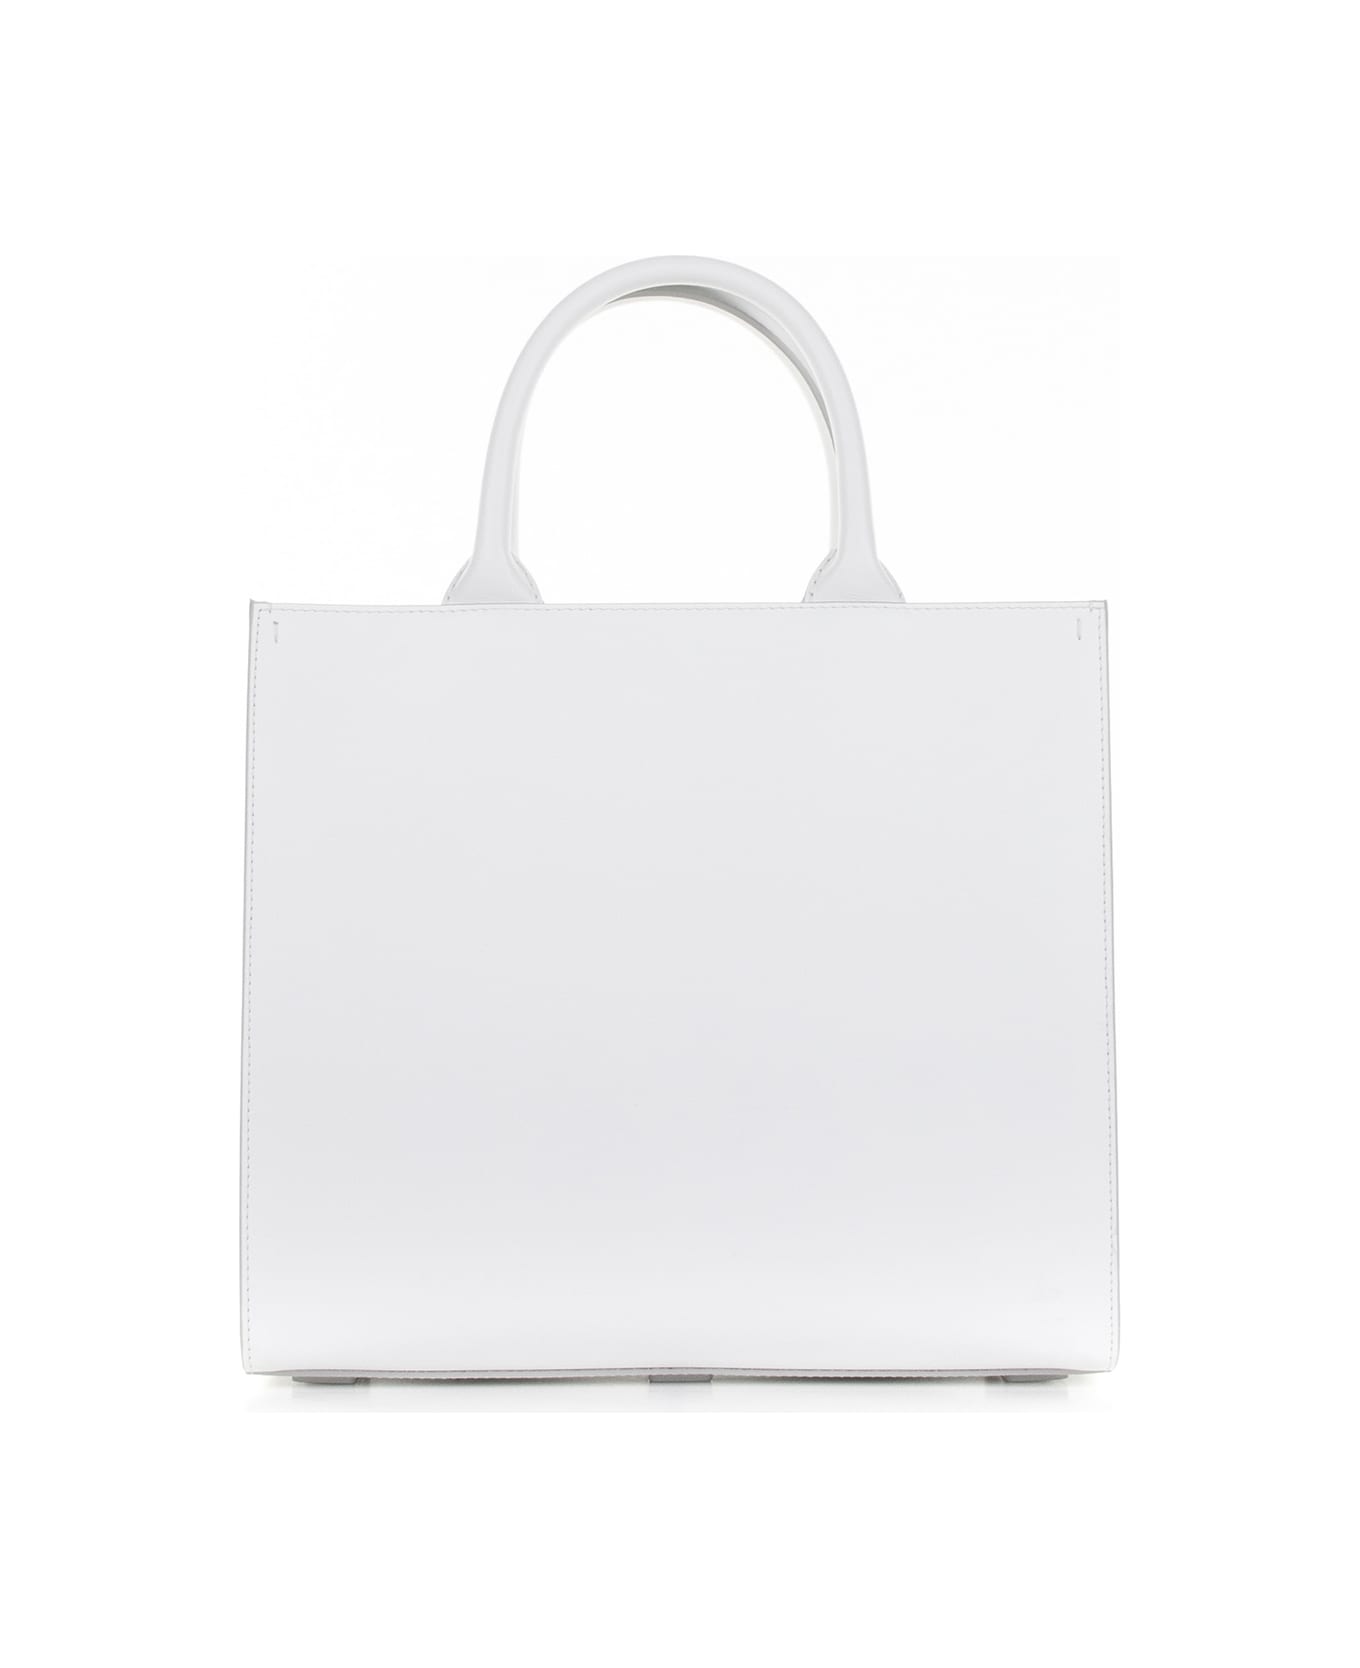 Dolce & Gabbana Daily Small White Leather Shopping Bag - BIANCO OTTICO